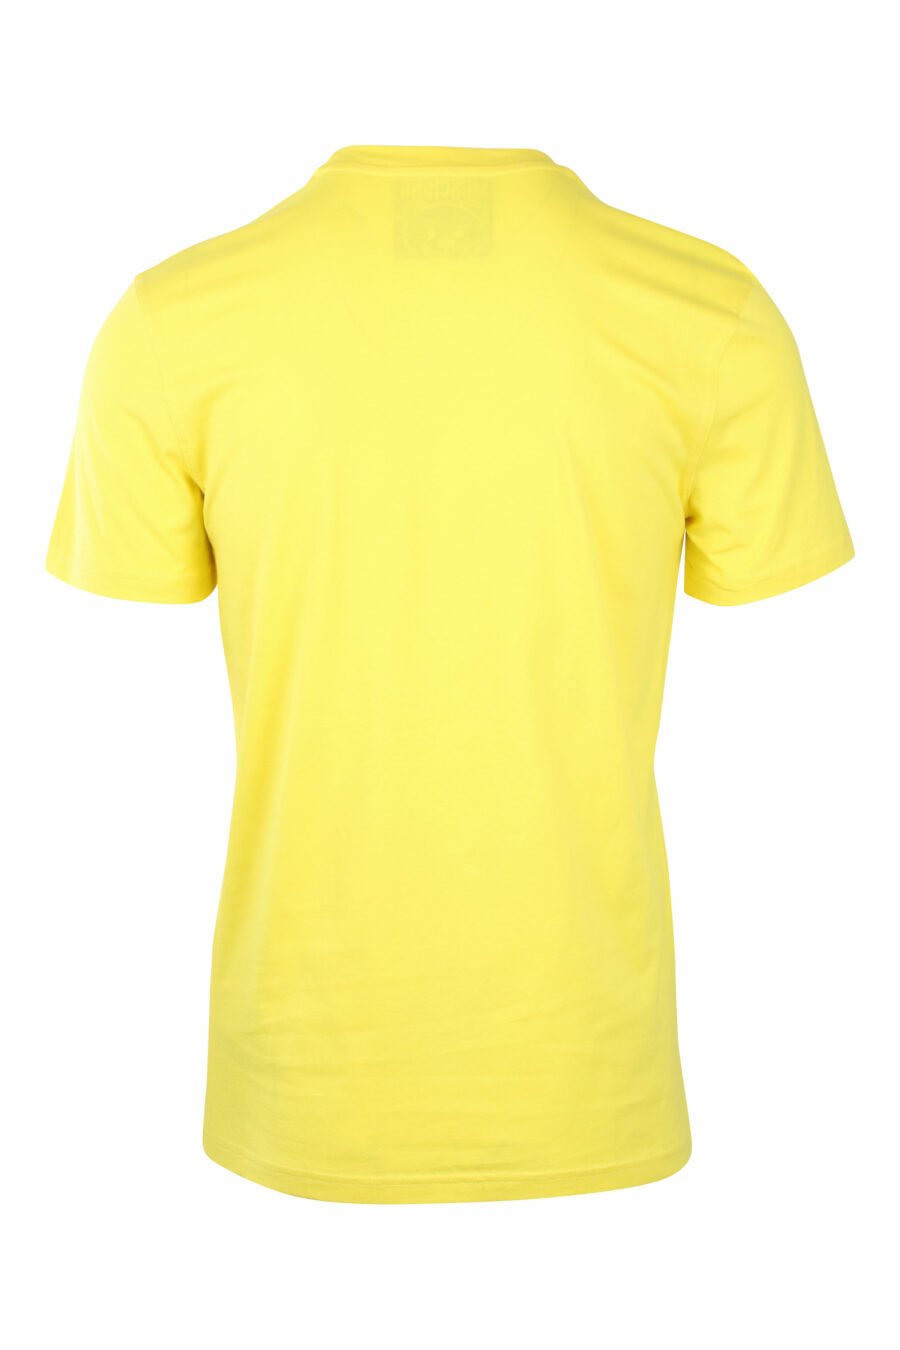 Yellow T-shirt with monochrome bear minilogue - IMG 1409